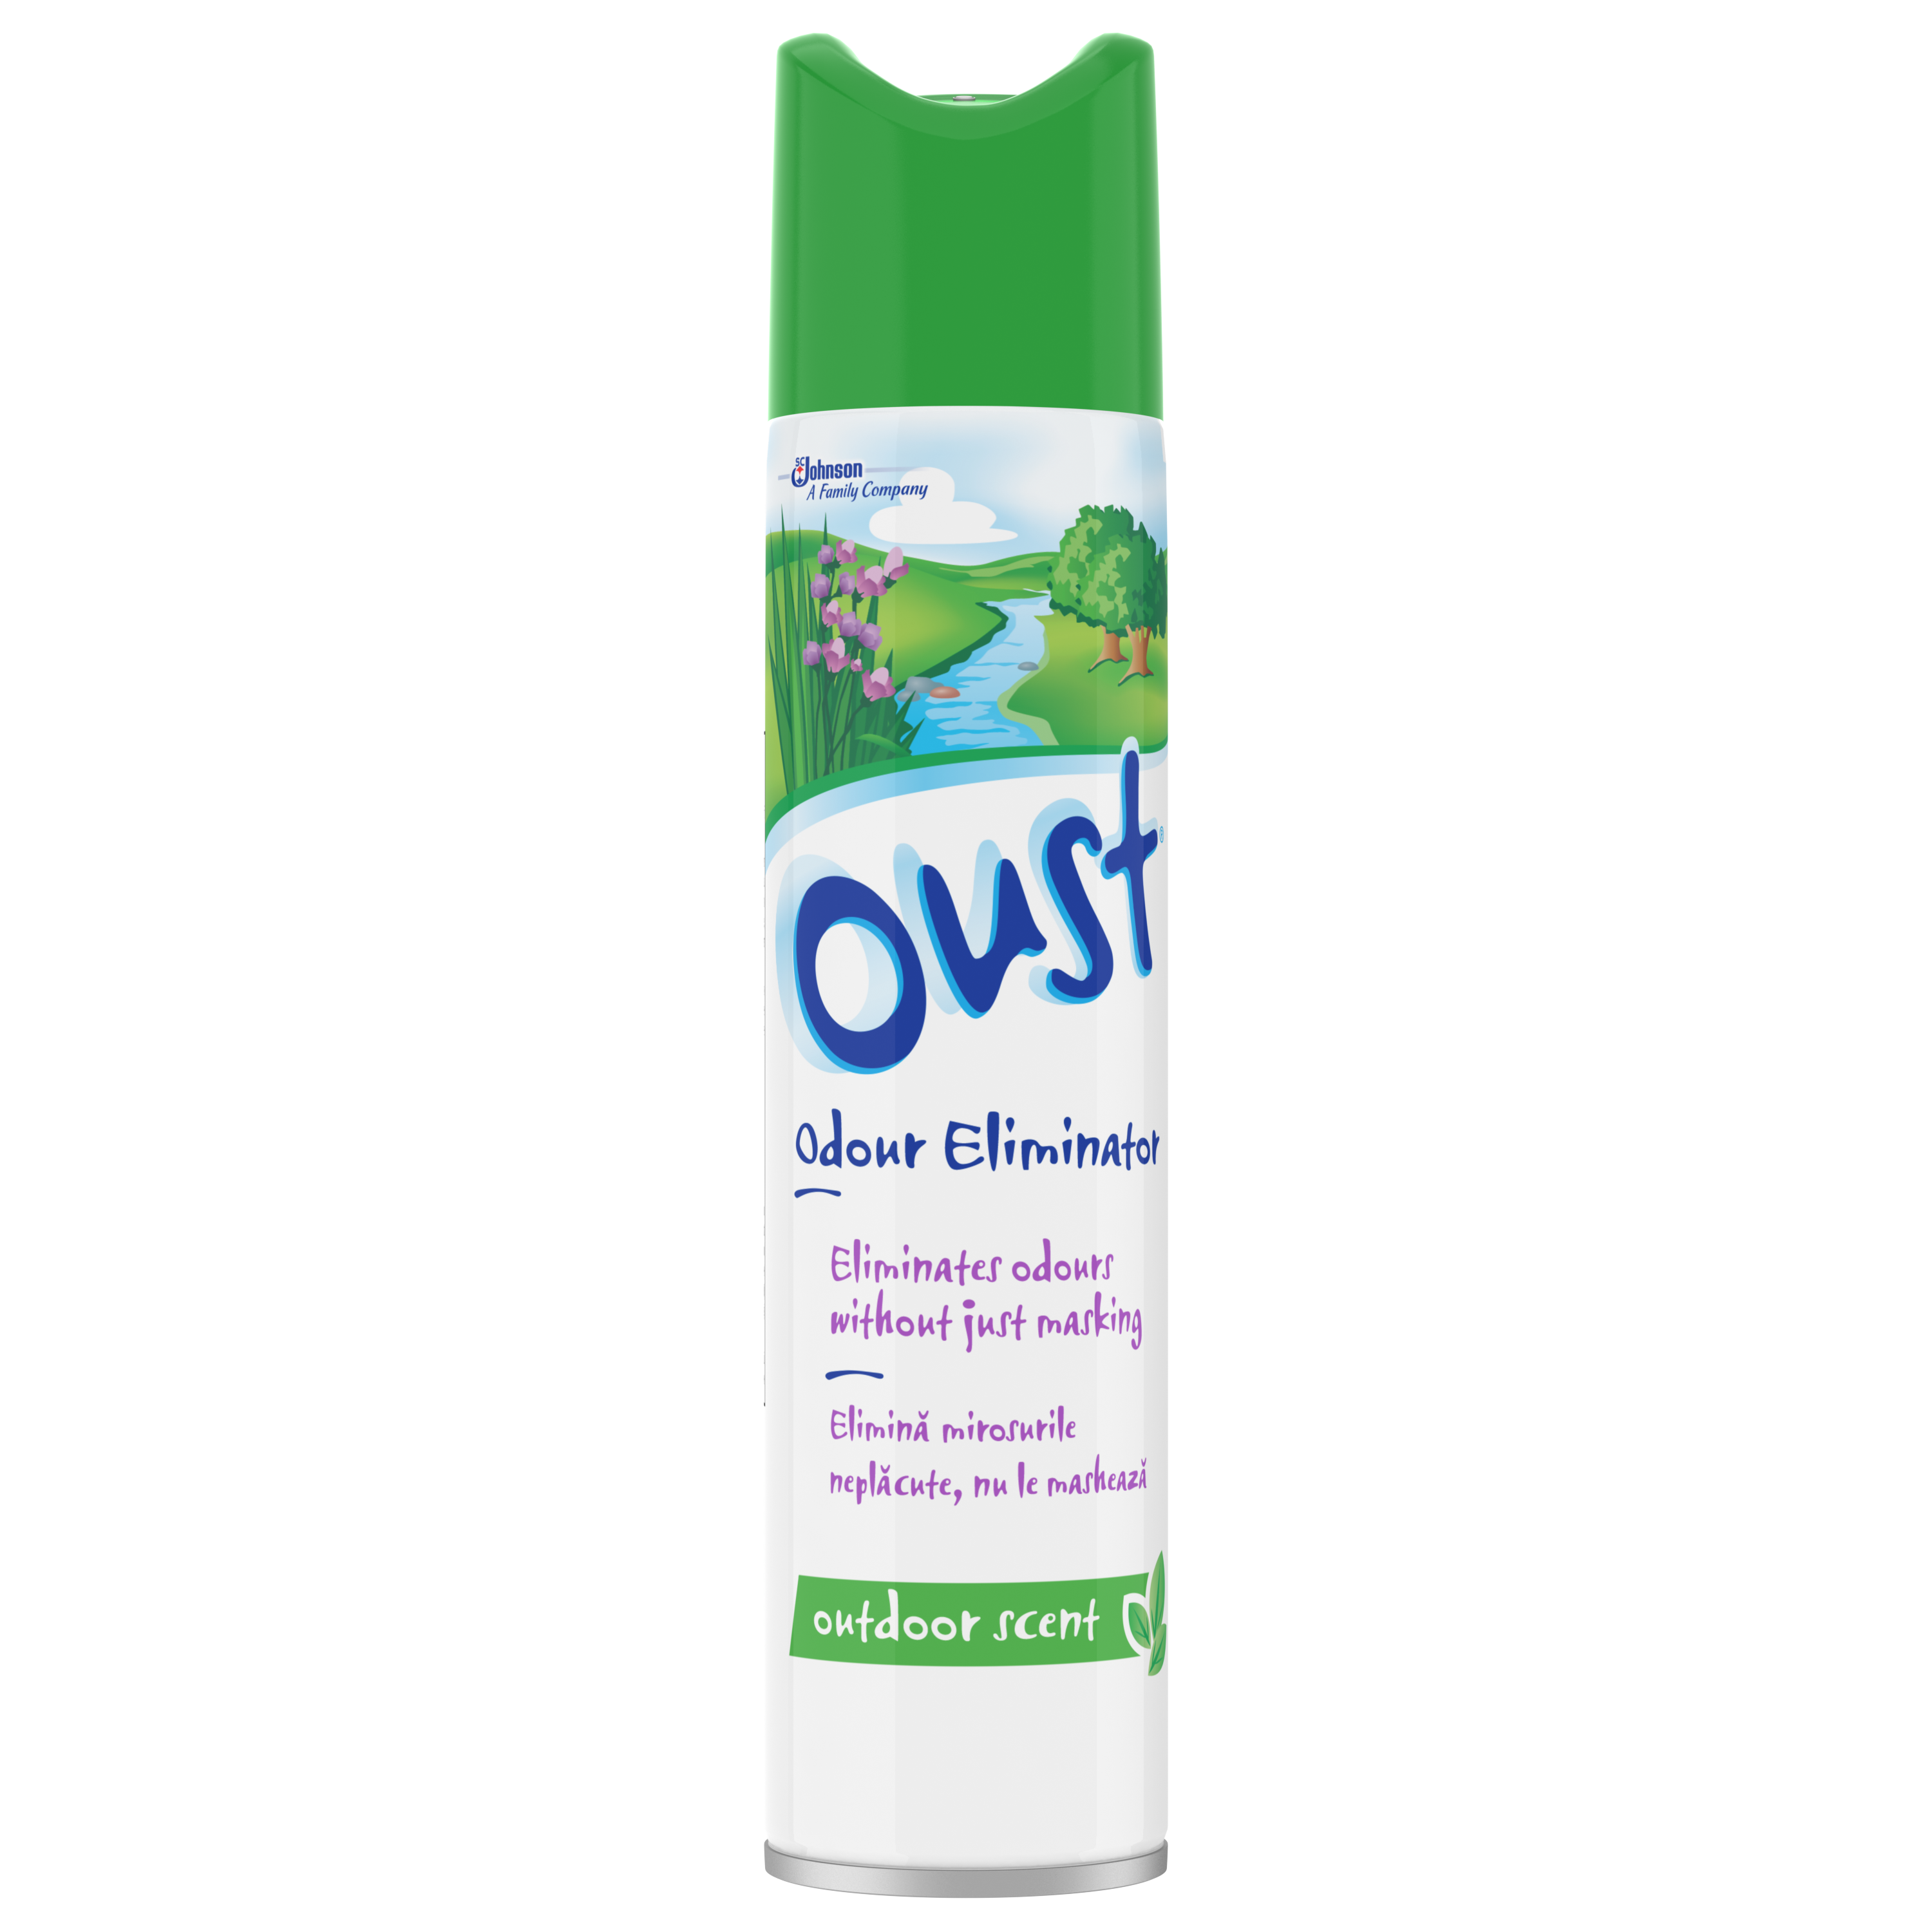 Oust® Odour Eliminator Outdoor Scent Air Freshener